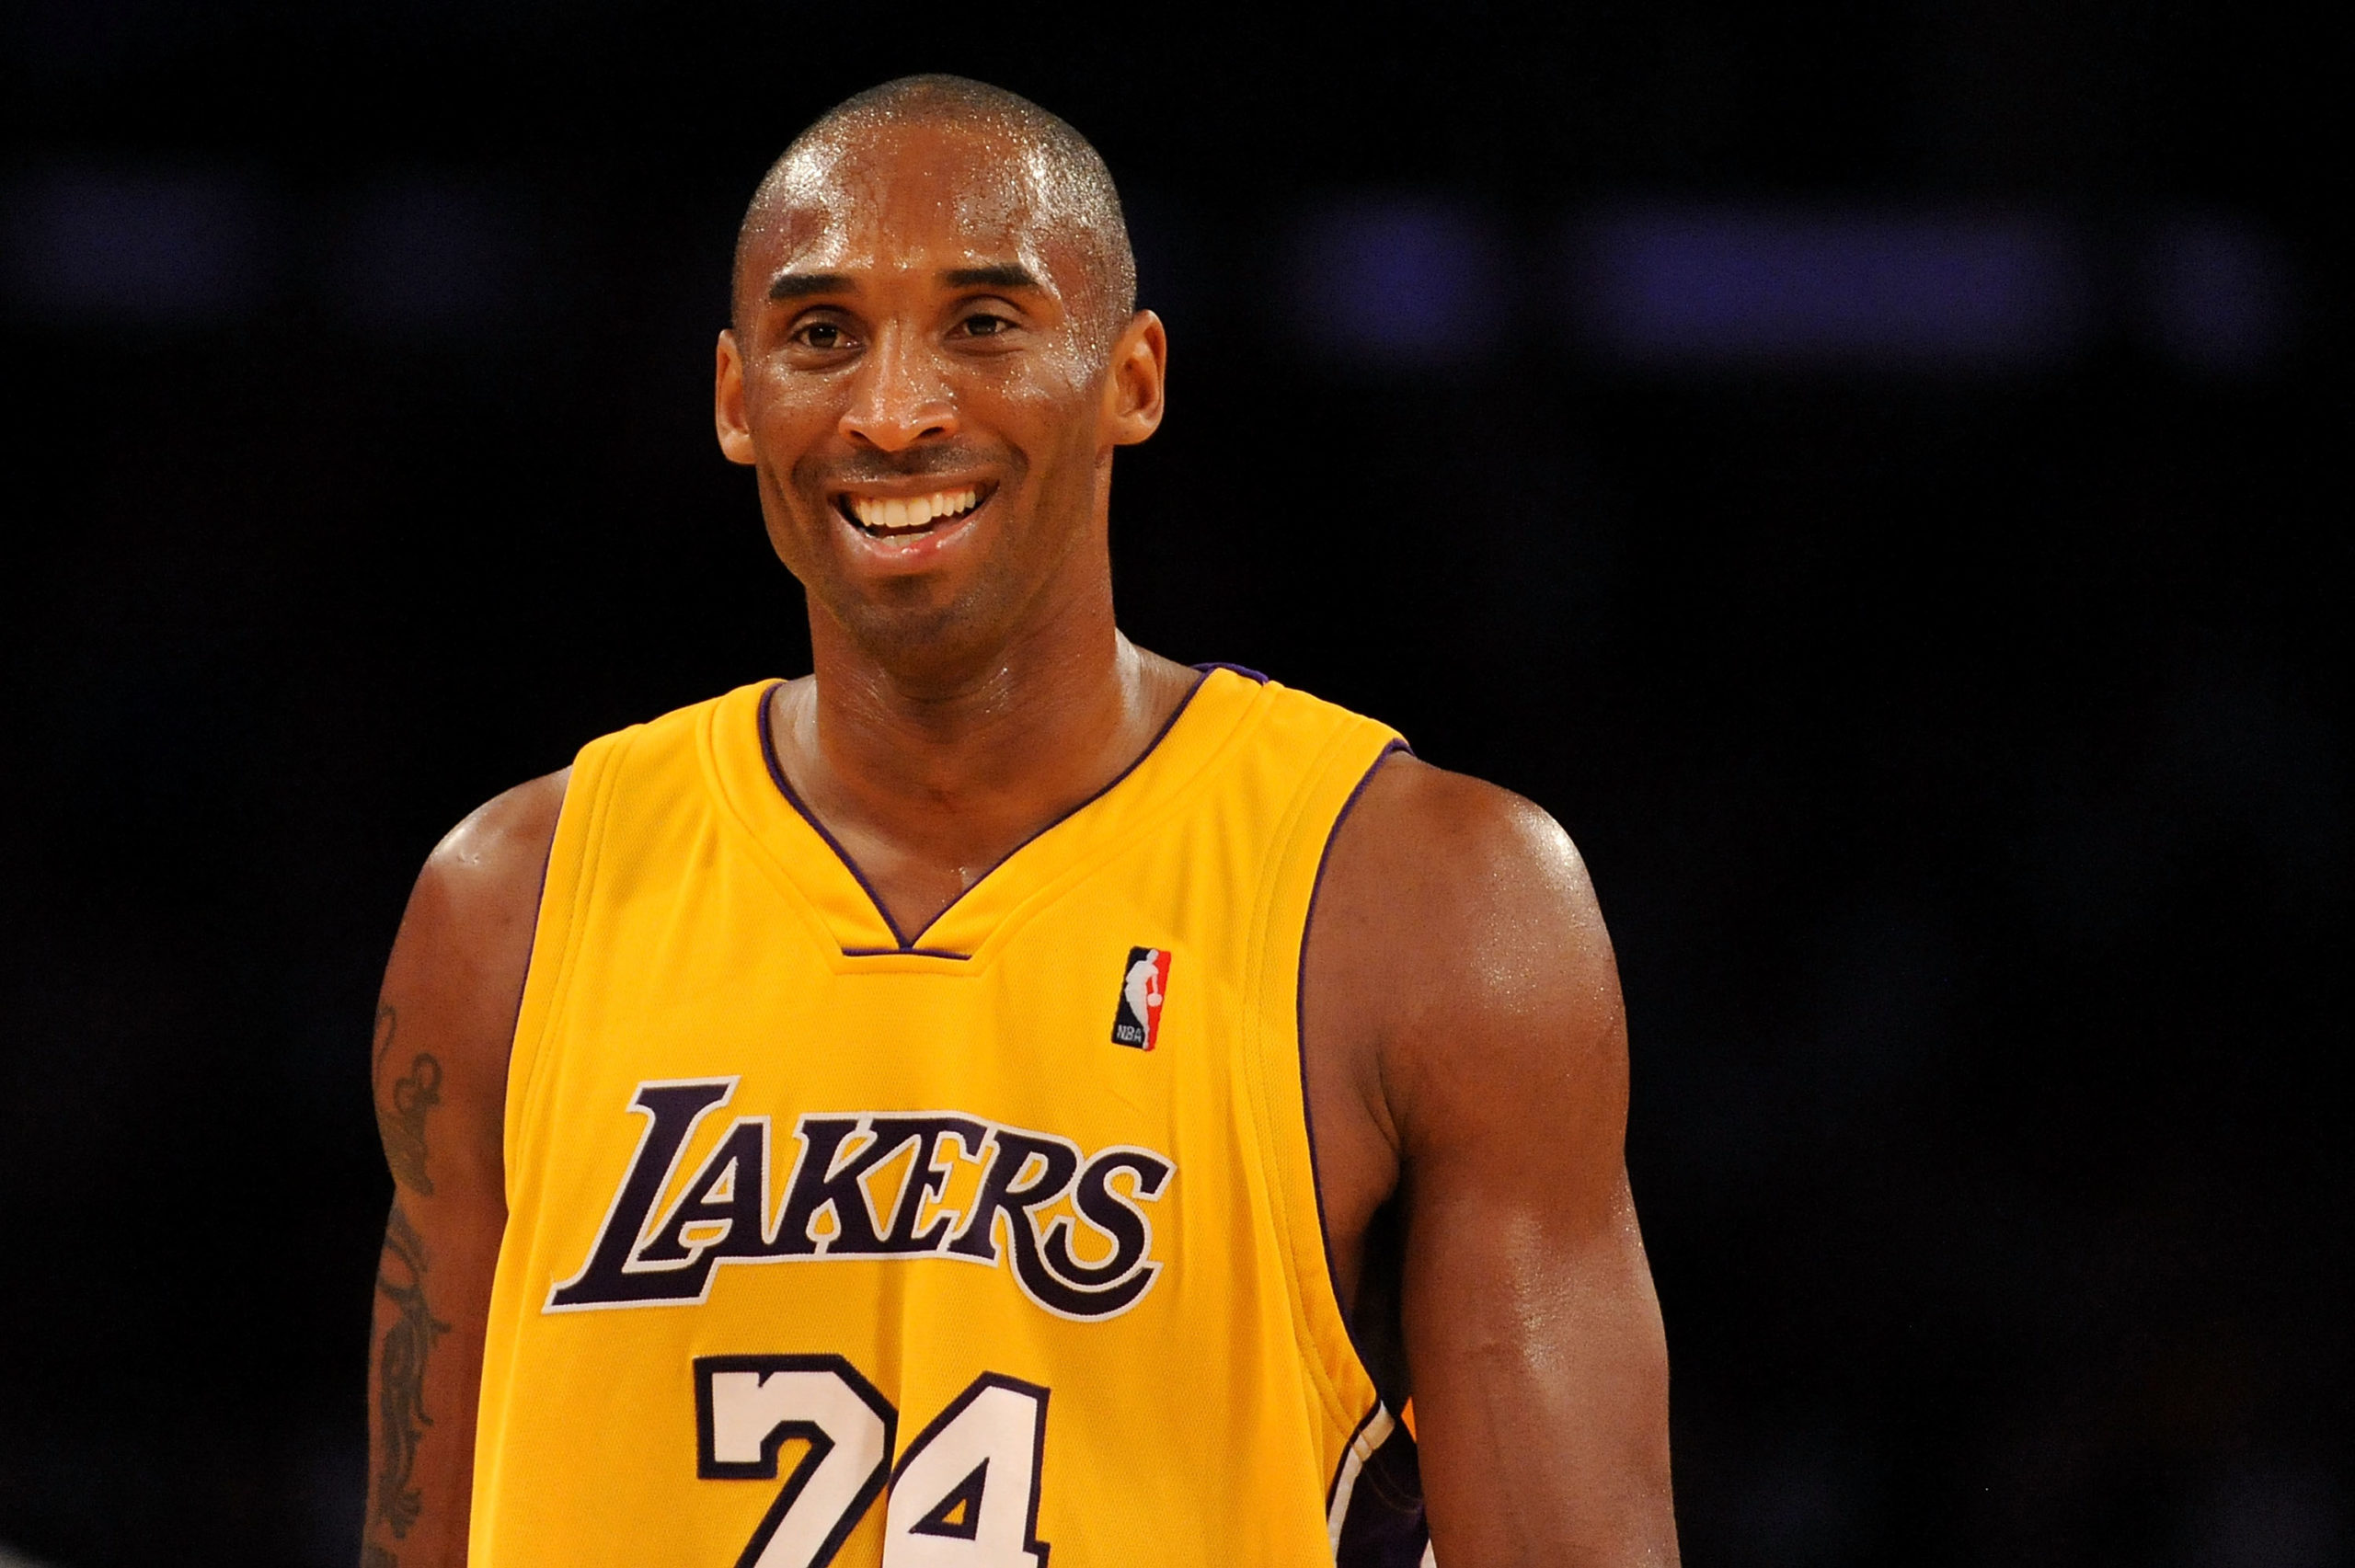 NBA-Kobe Bryant's jersey from MVP season sold for $5.8 million